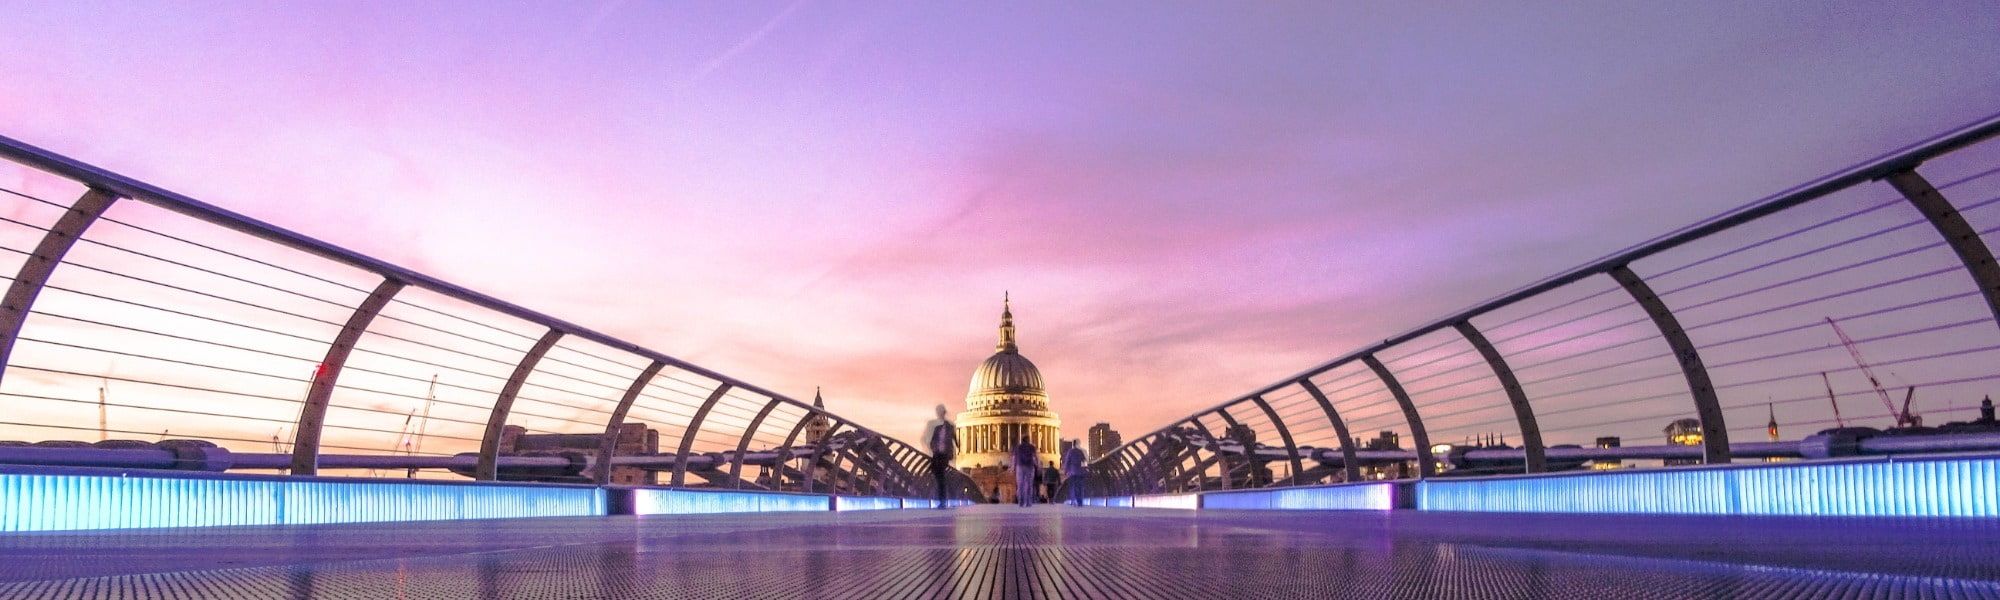 London Millennium Bridge Header image